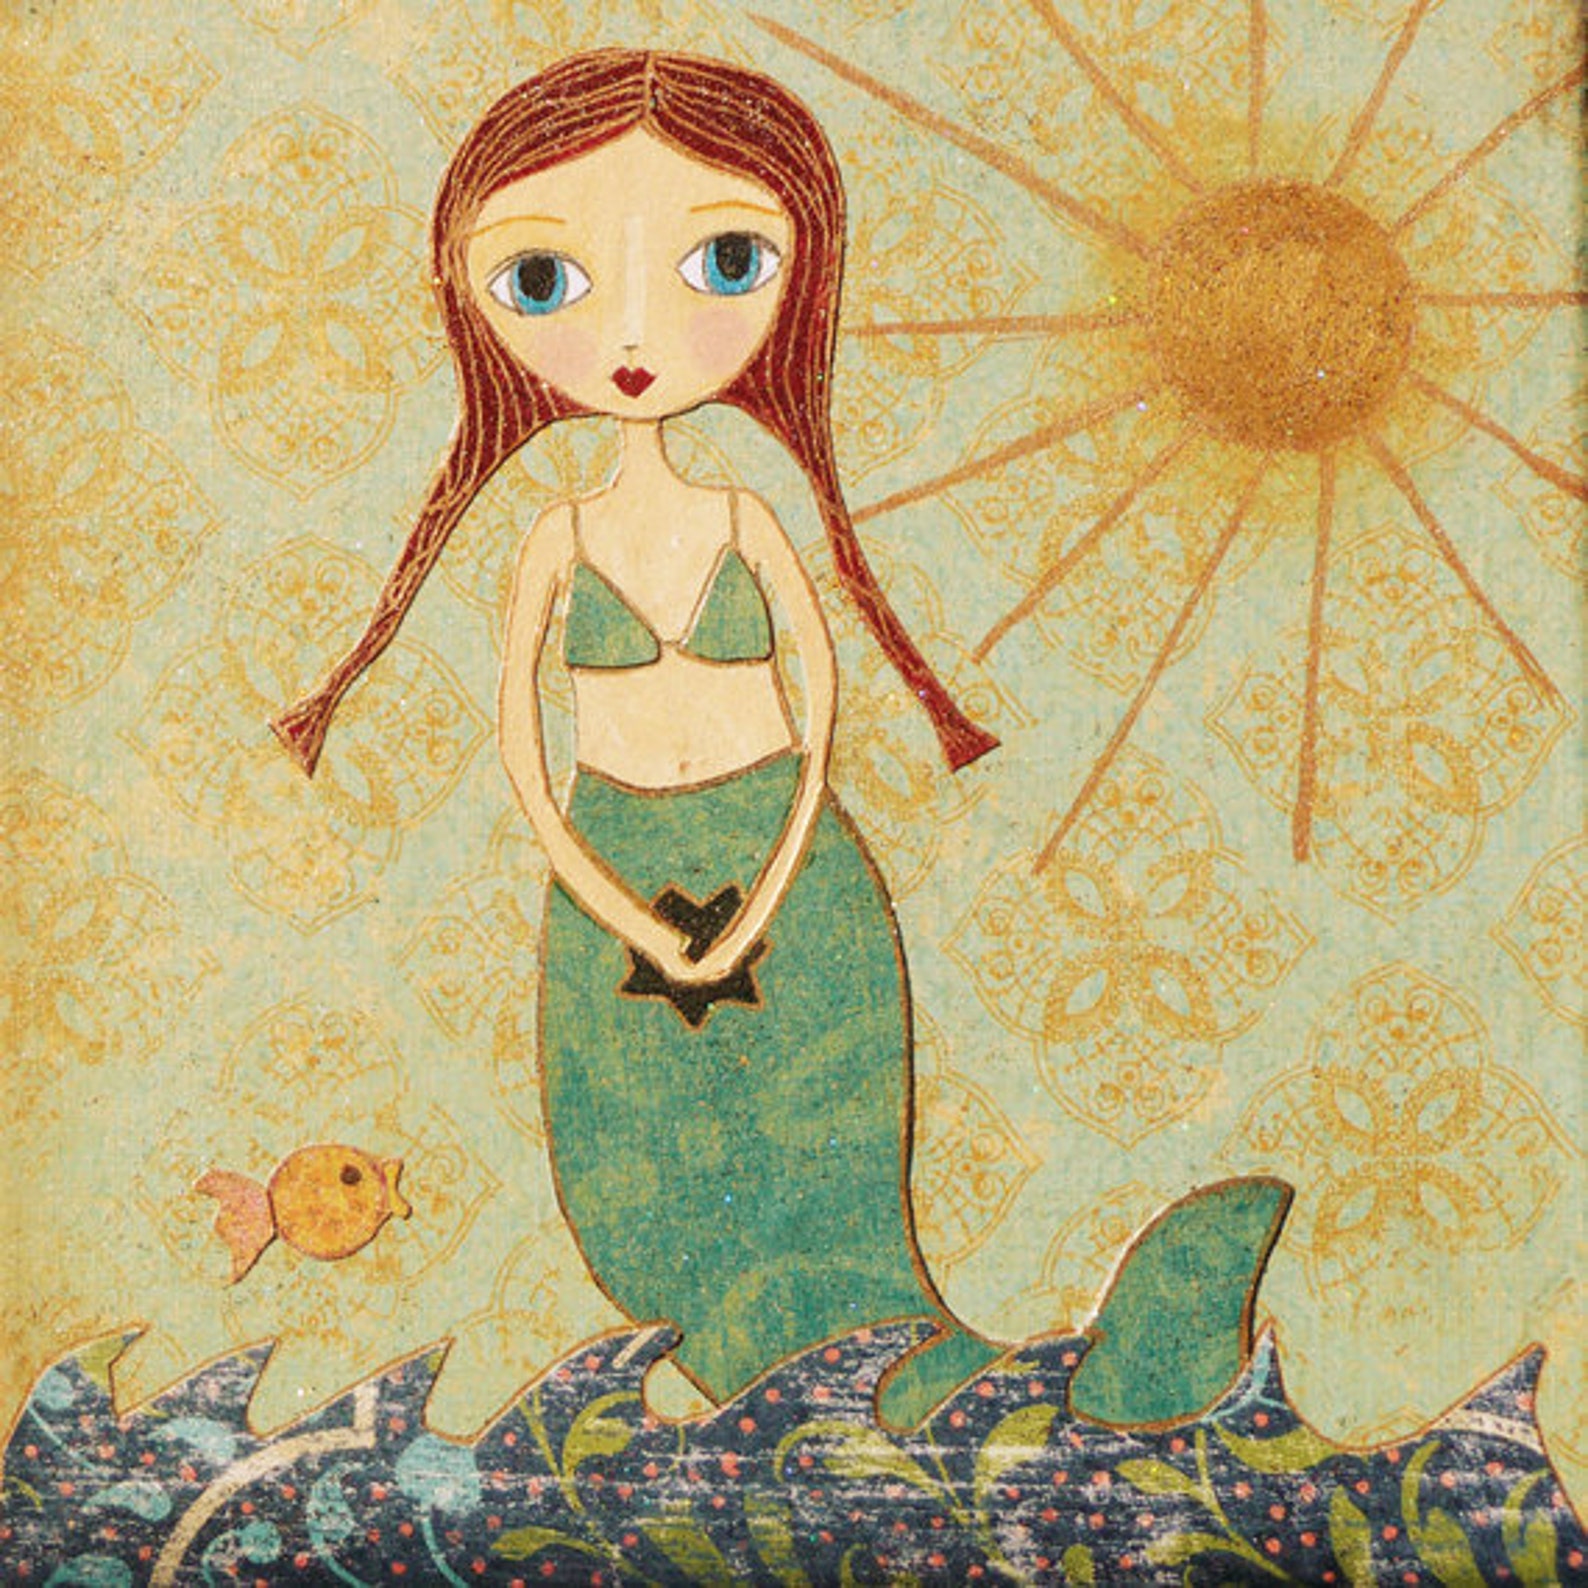 Mermaid Art Print Children Decor Girl Nursery Decor Cute Whimsical